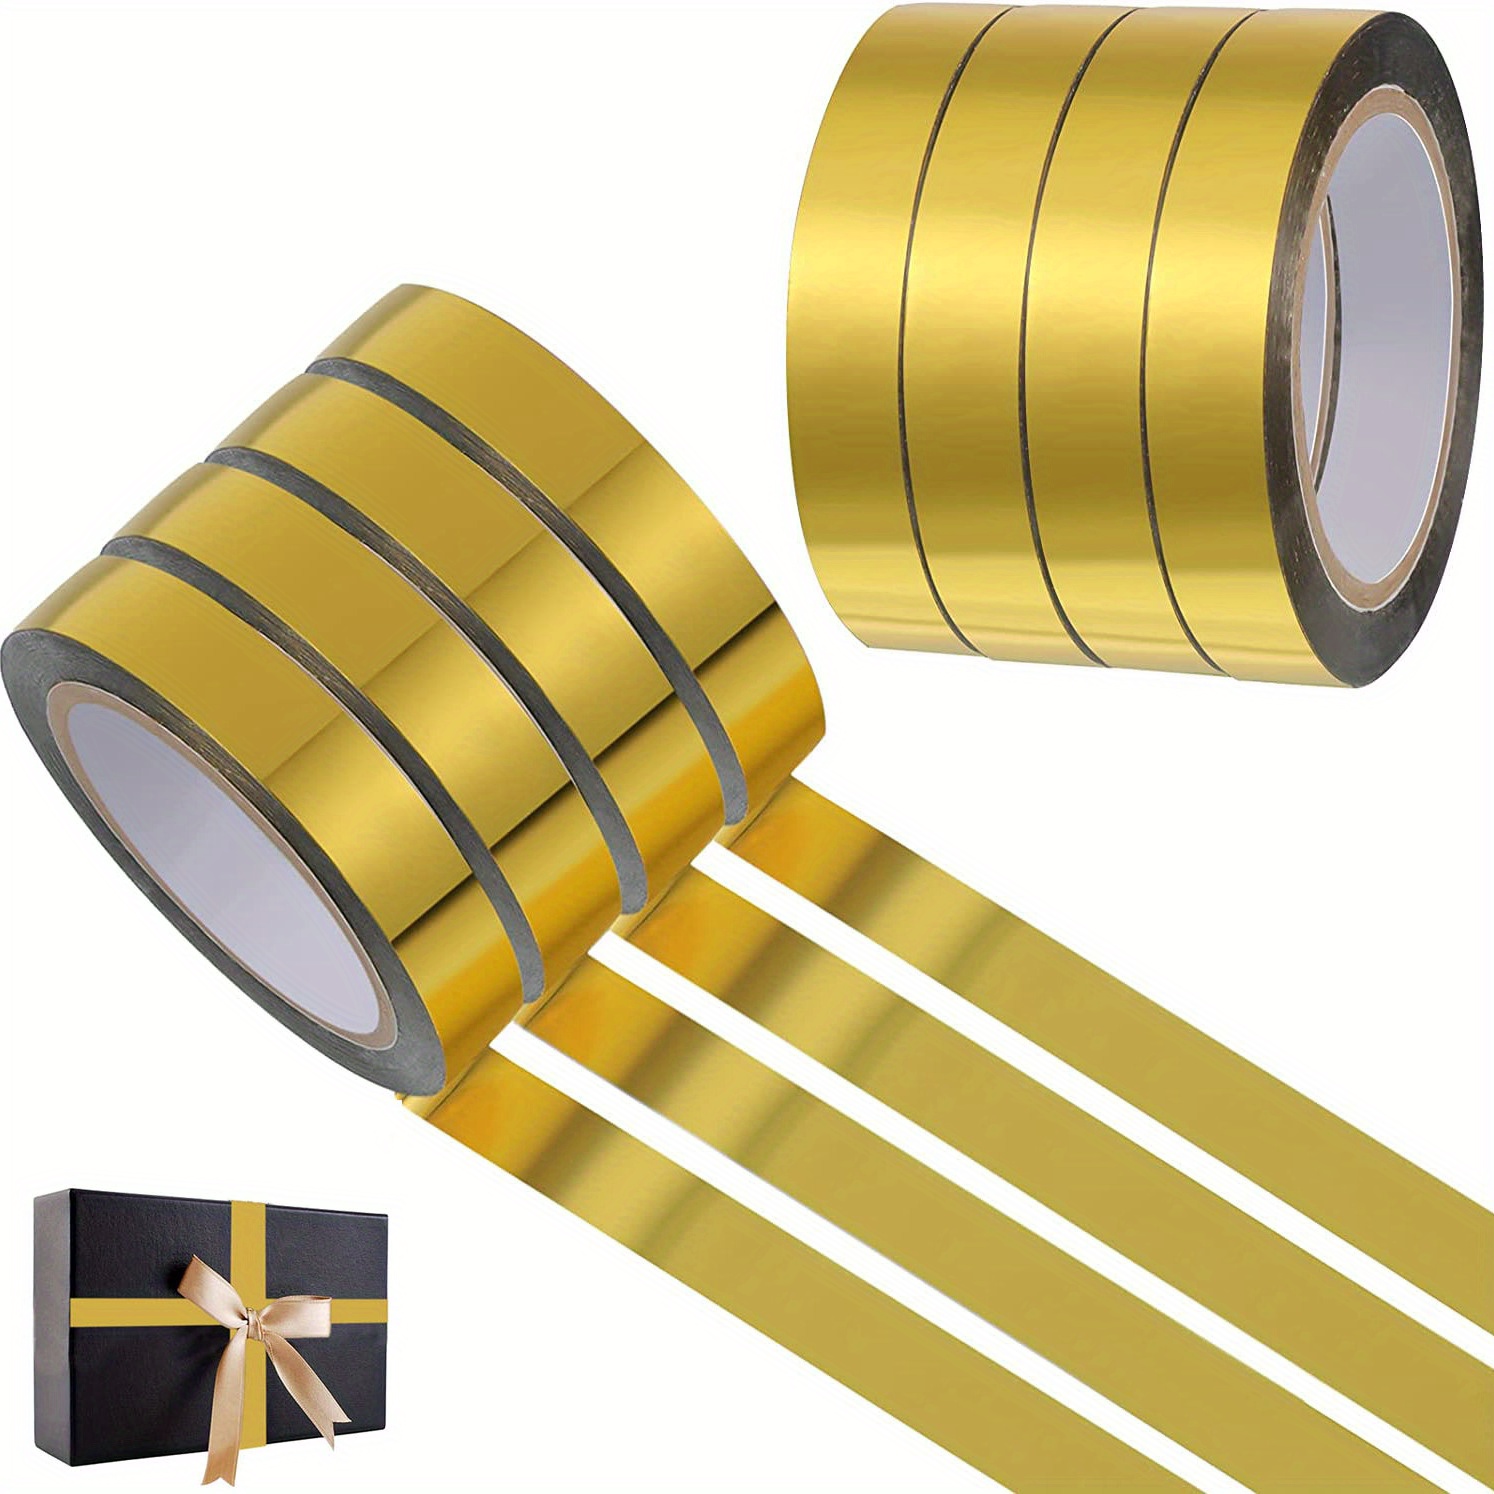 3 Rolls Decorative Strips Self Adhesive Gold Tape Metallized